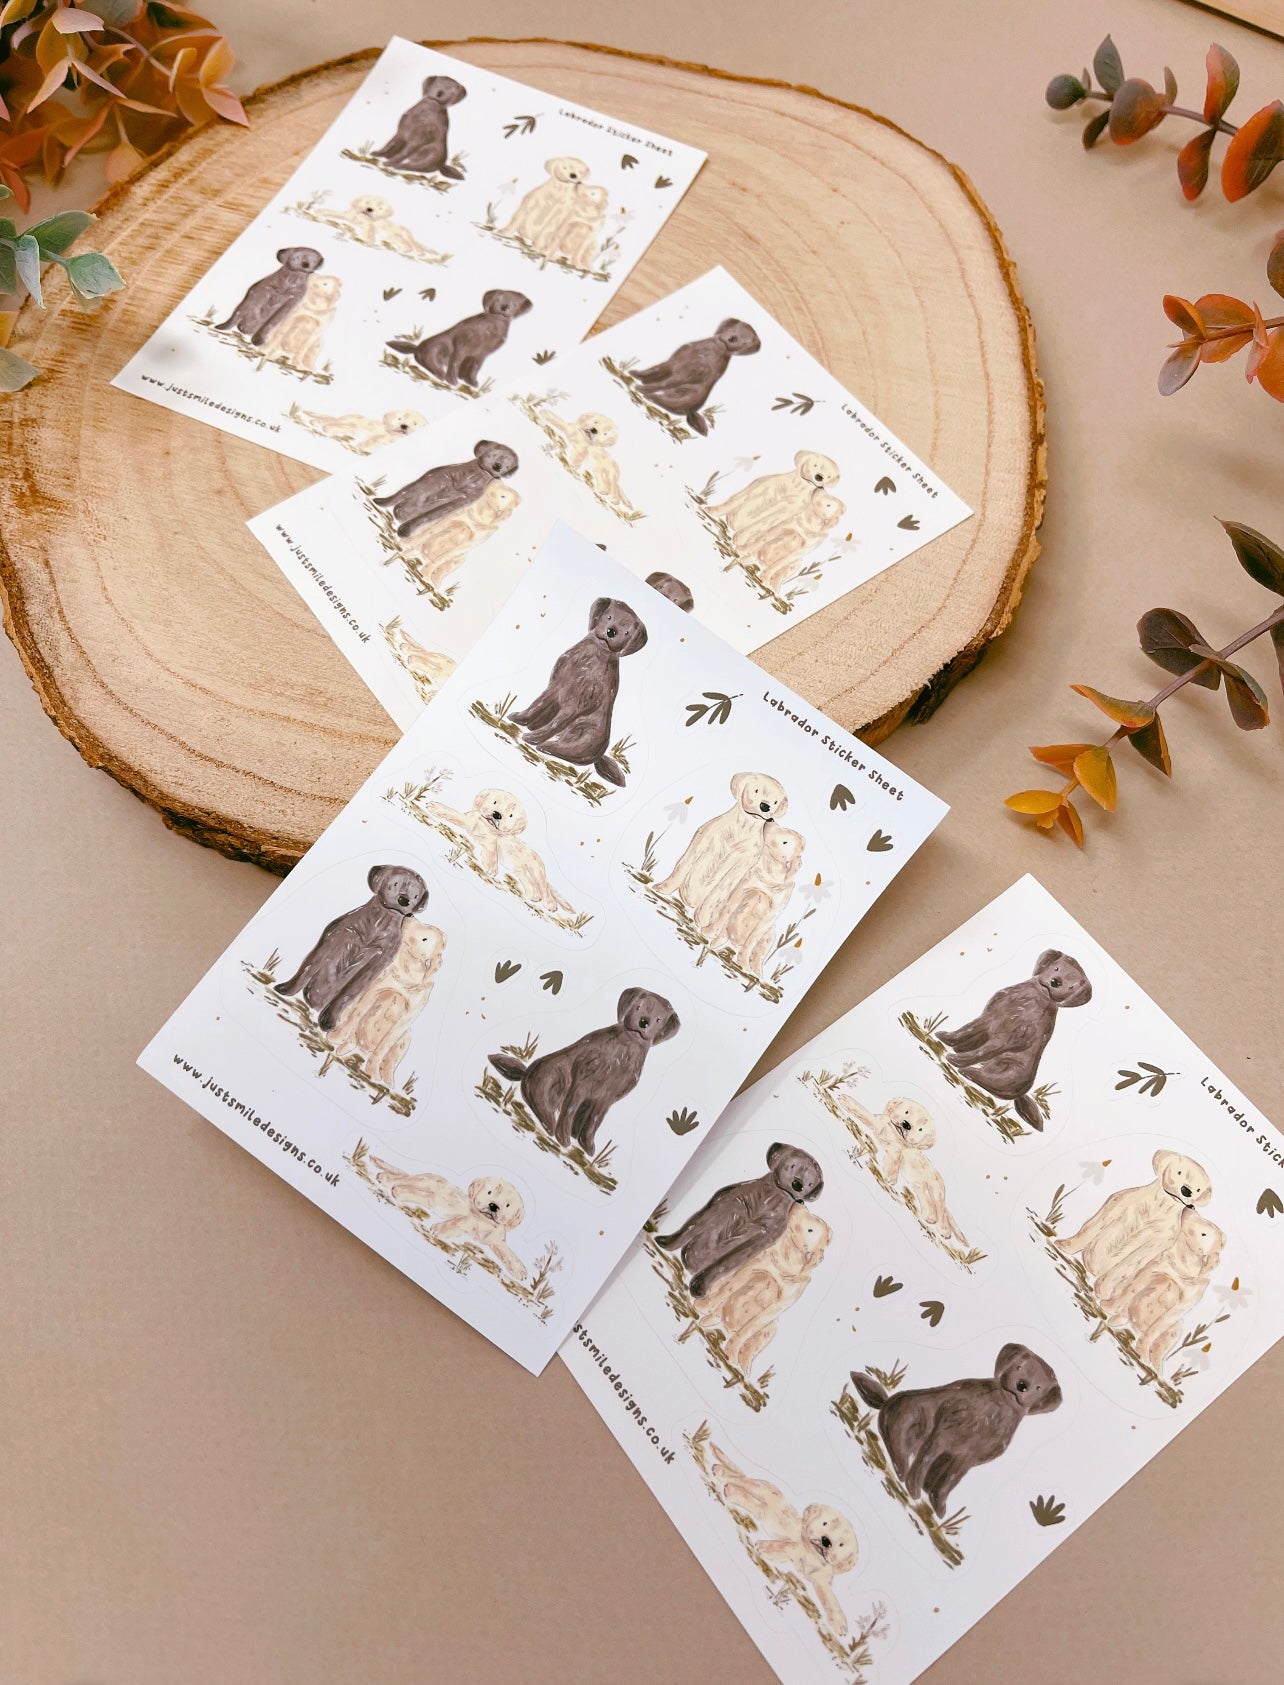 Labrador Sticker Sheet